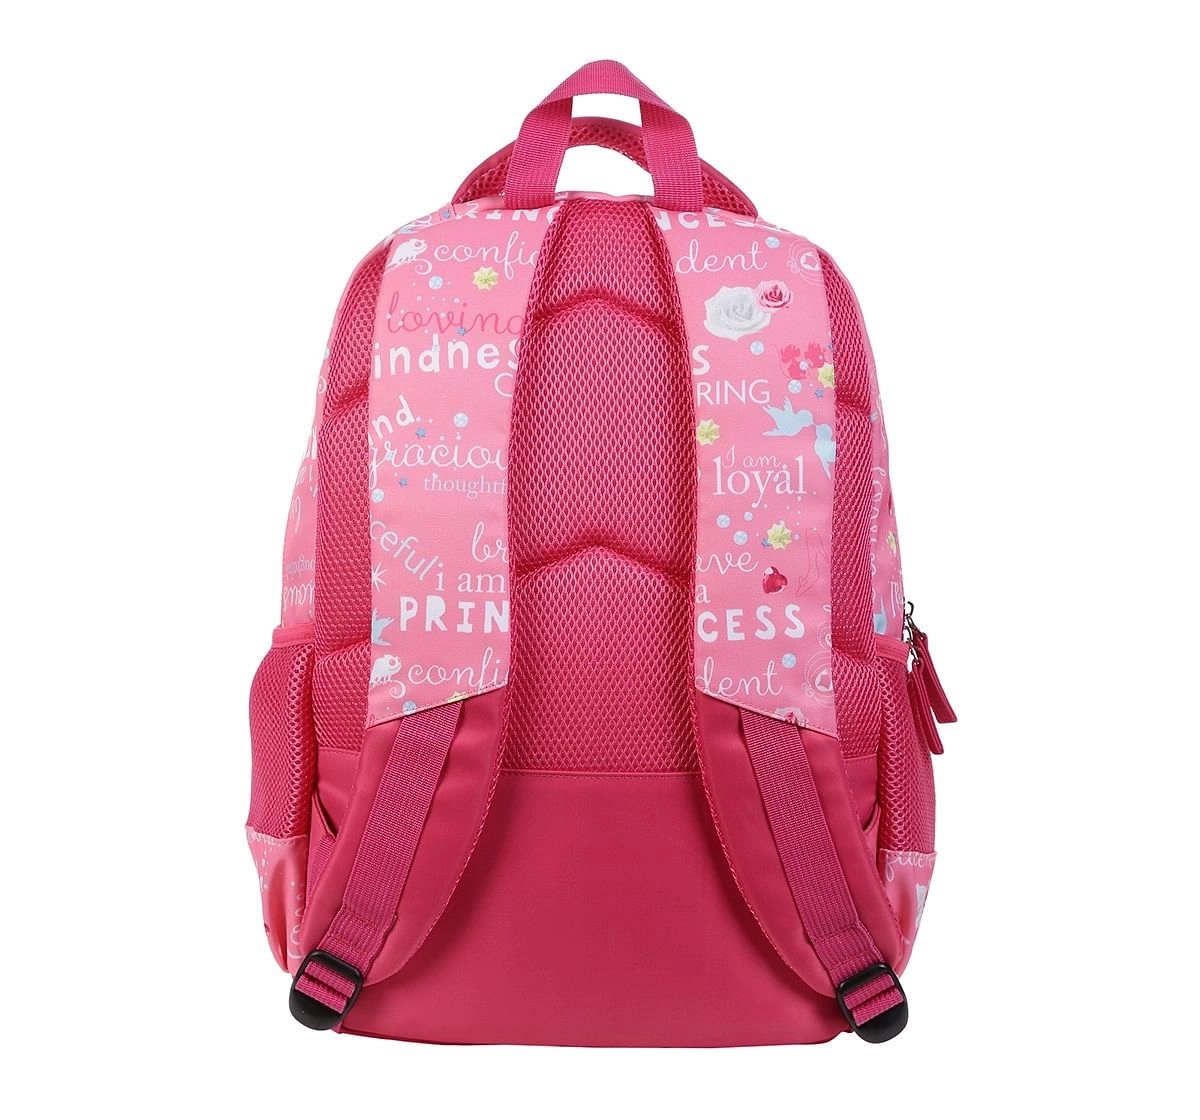 Disney Princess Believe In Friendship Pink 17" Backpack Bags for age 3Y+ 